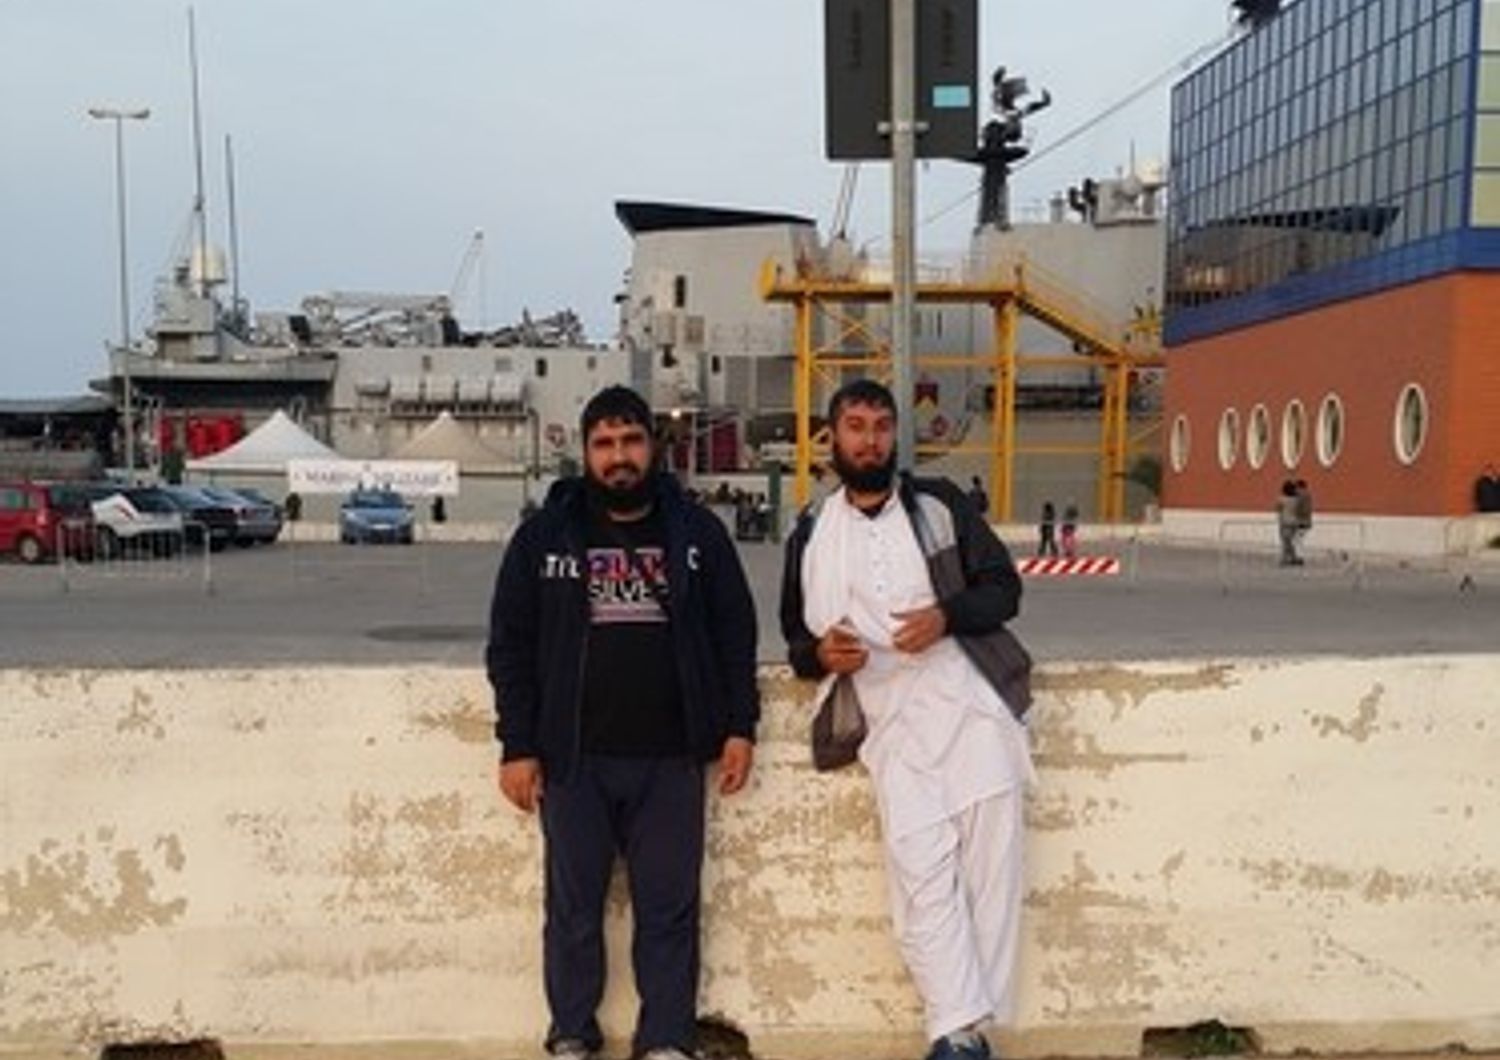 due degli arrestati a Bari&nbsp;